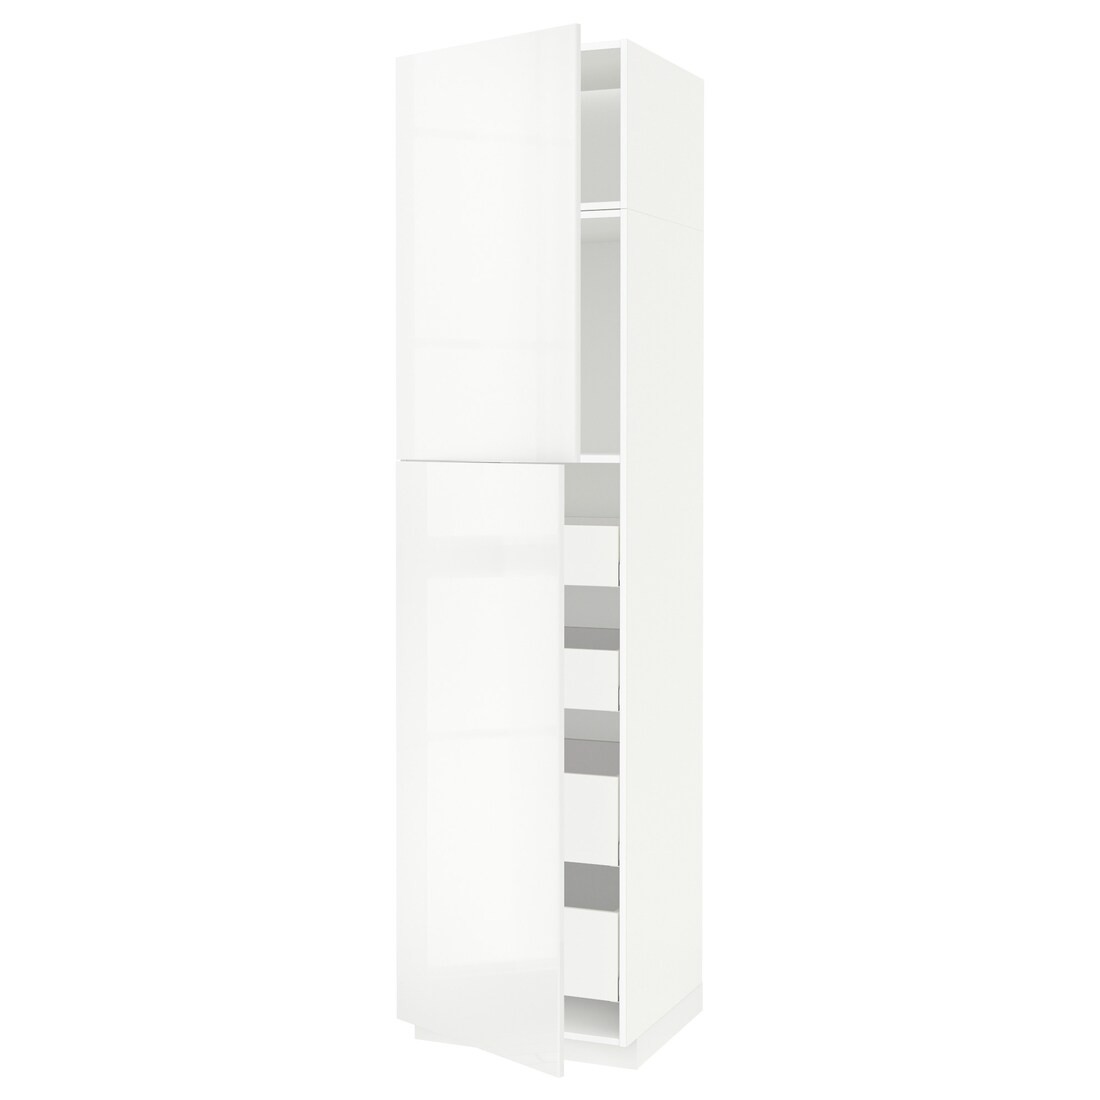 IKEA METOD МЕТОД / MAXIMERA МАКСИМЕРА Шкаф высокий 2 двери / 4 ящика, белый / Ringhult белый, 60x60x240 см 89467491 | 894.674.91